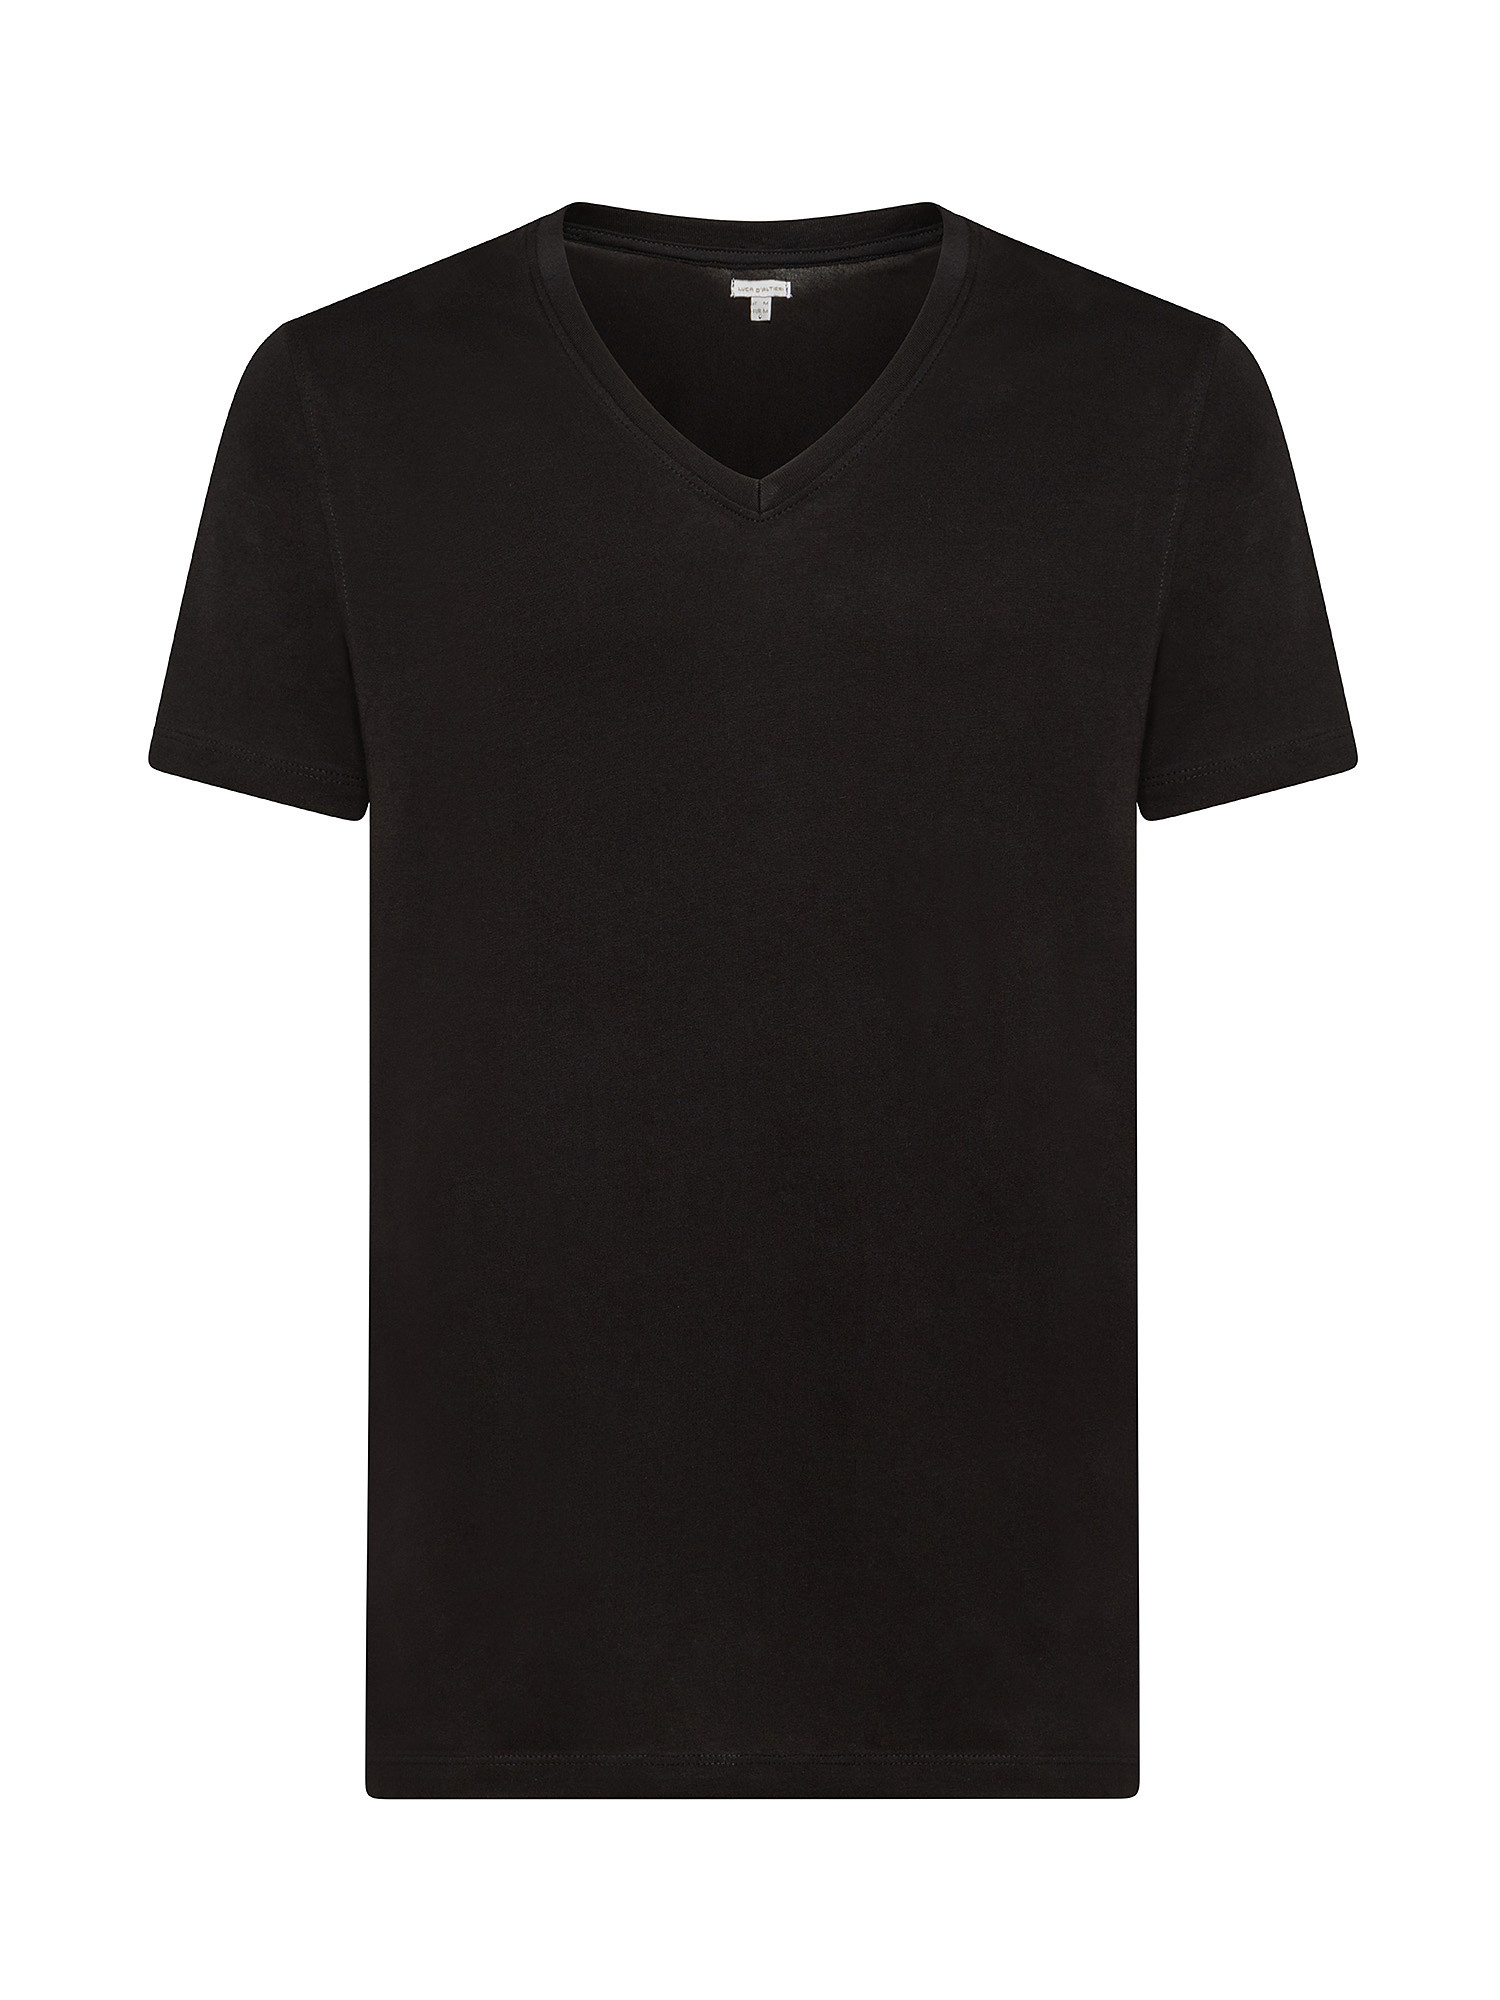 Luca D'Altieri - Supima cotton V-neck T-shirt, Black, large image number 0